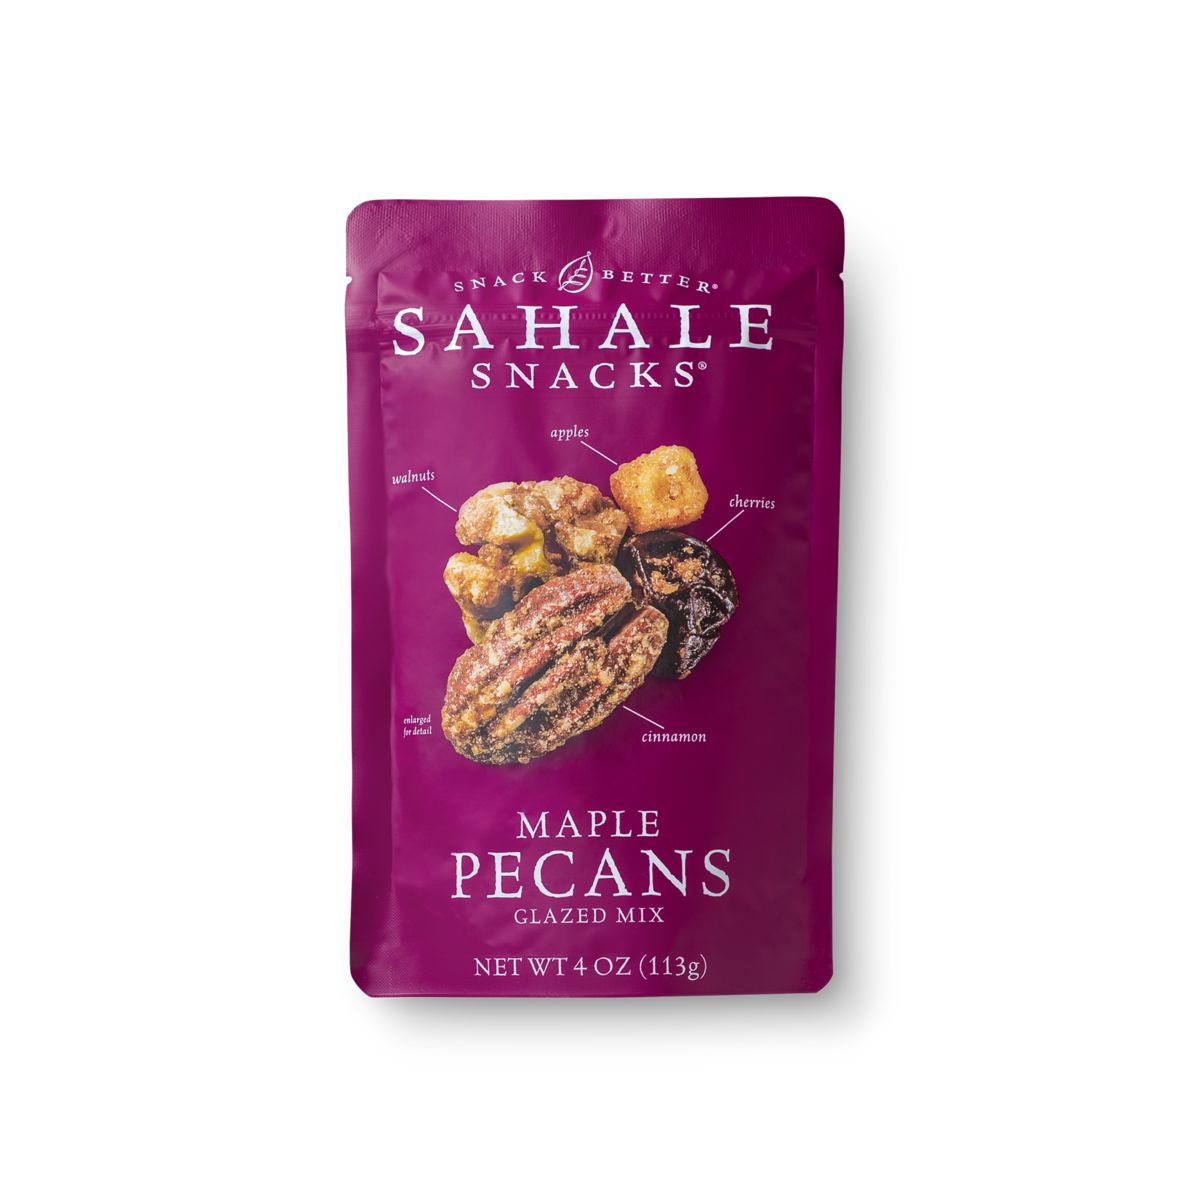 maple-pecans-glazed-mix-or-sahale-snacks-r